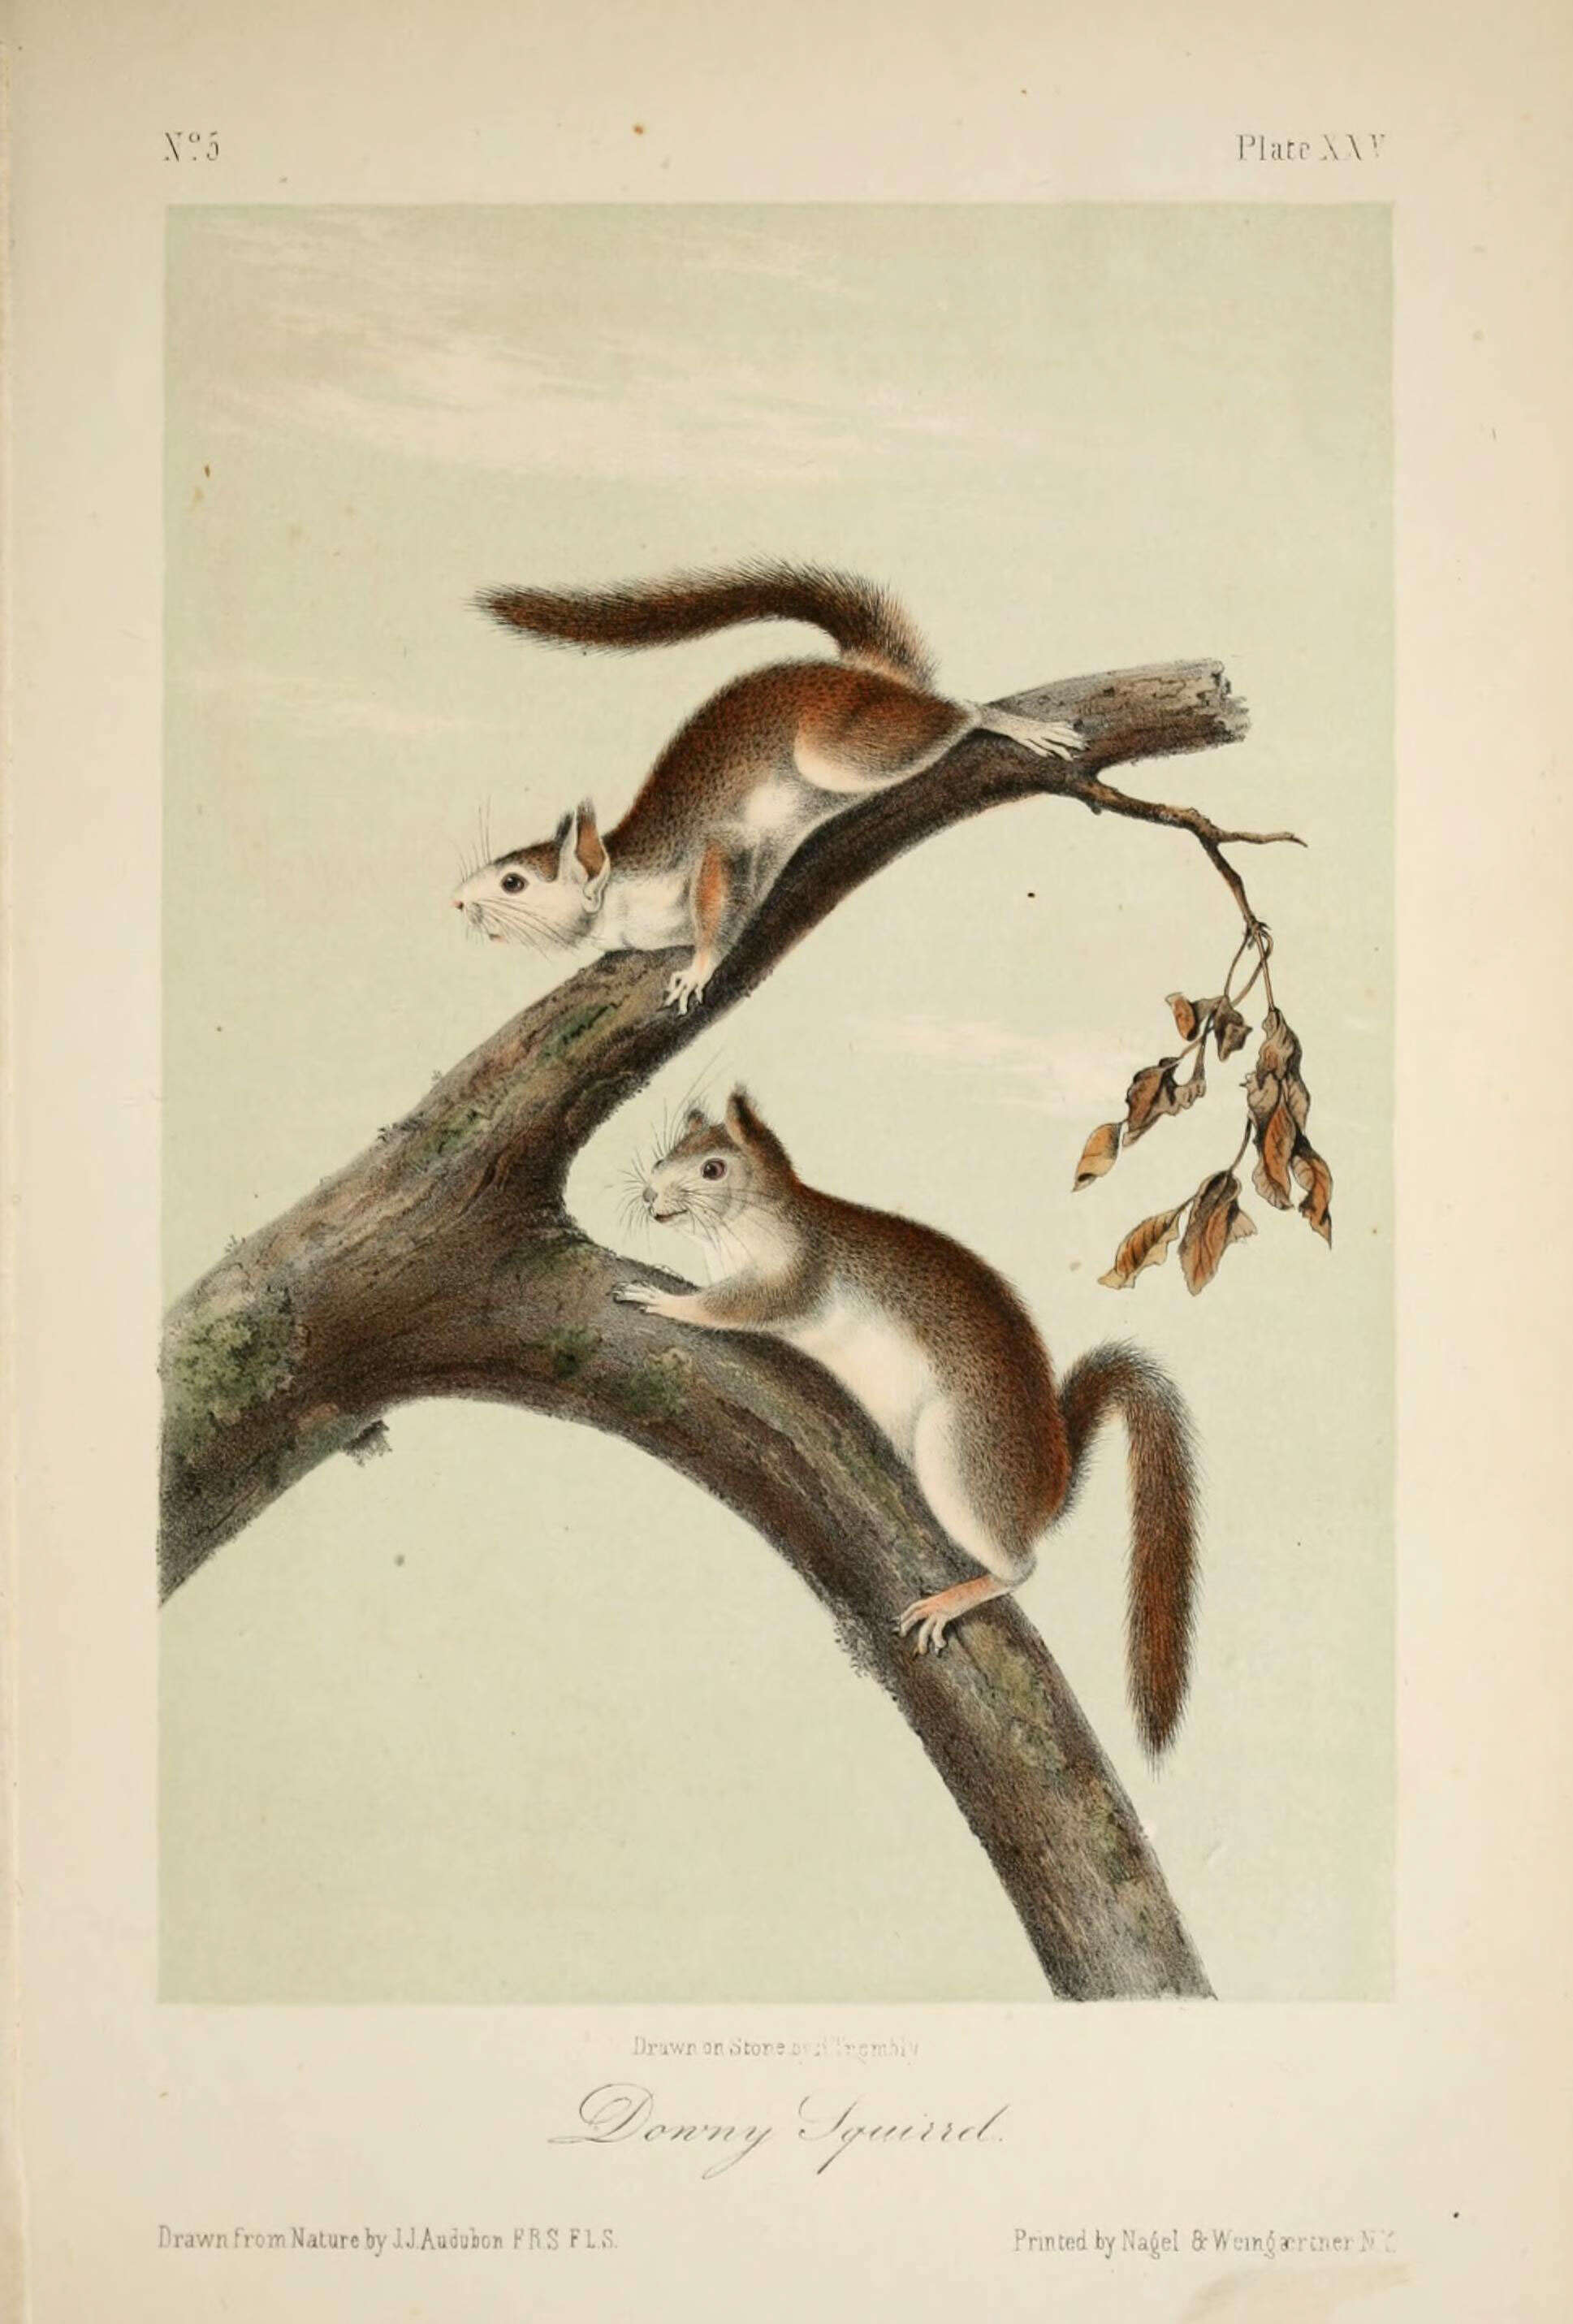 Image of pine squirrel